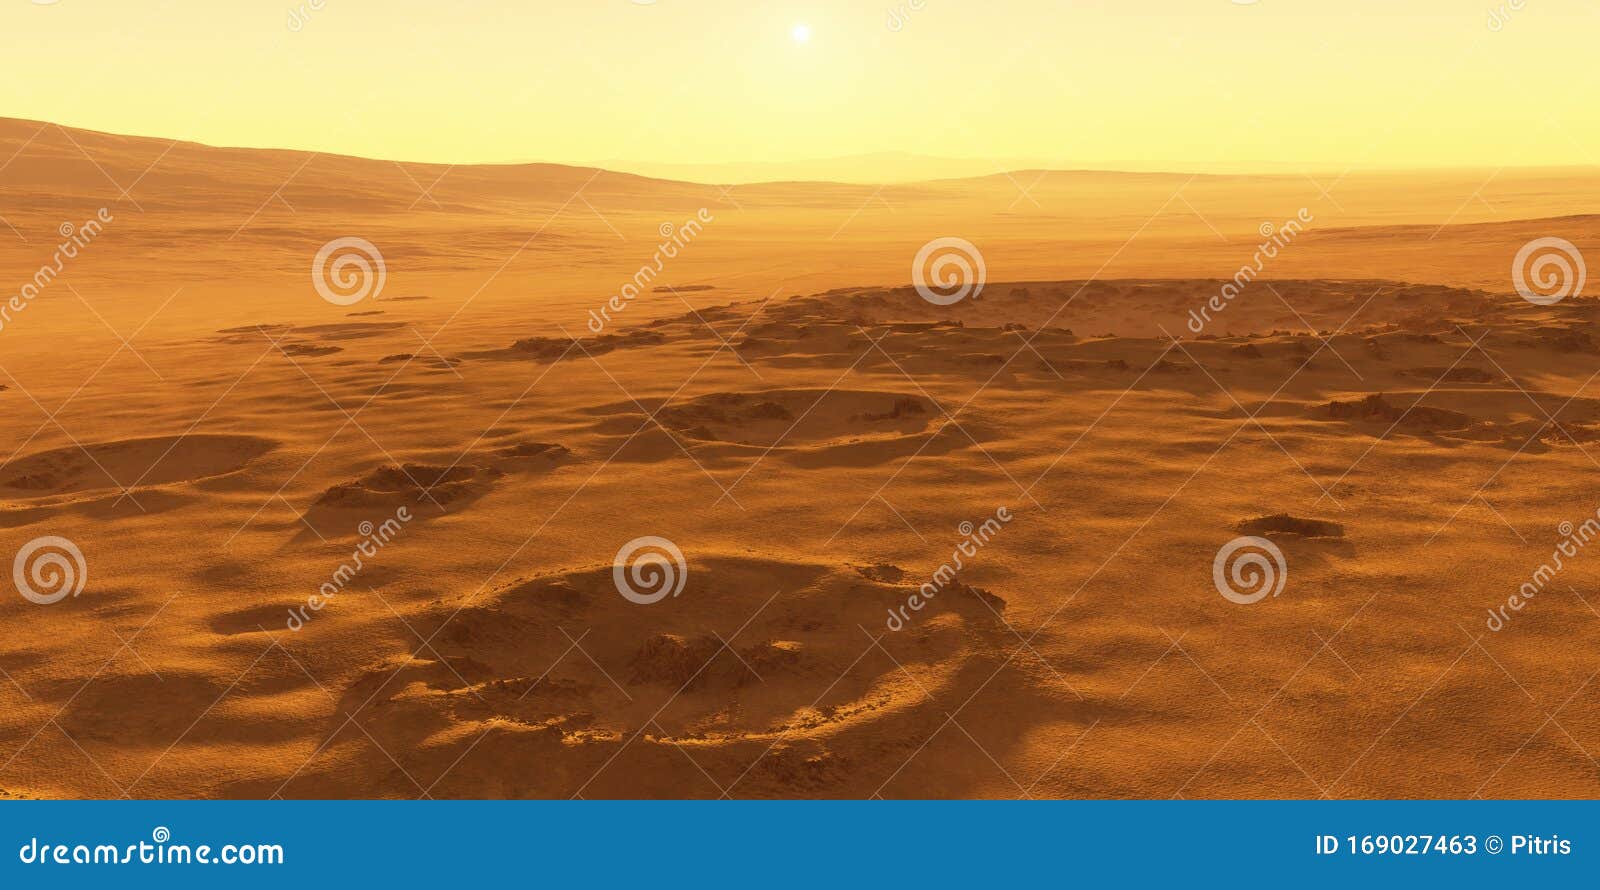 cold desert on mars. martian landscape